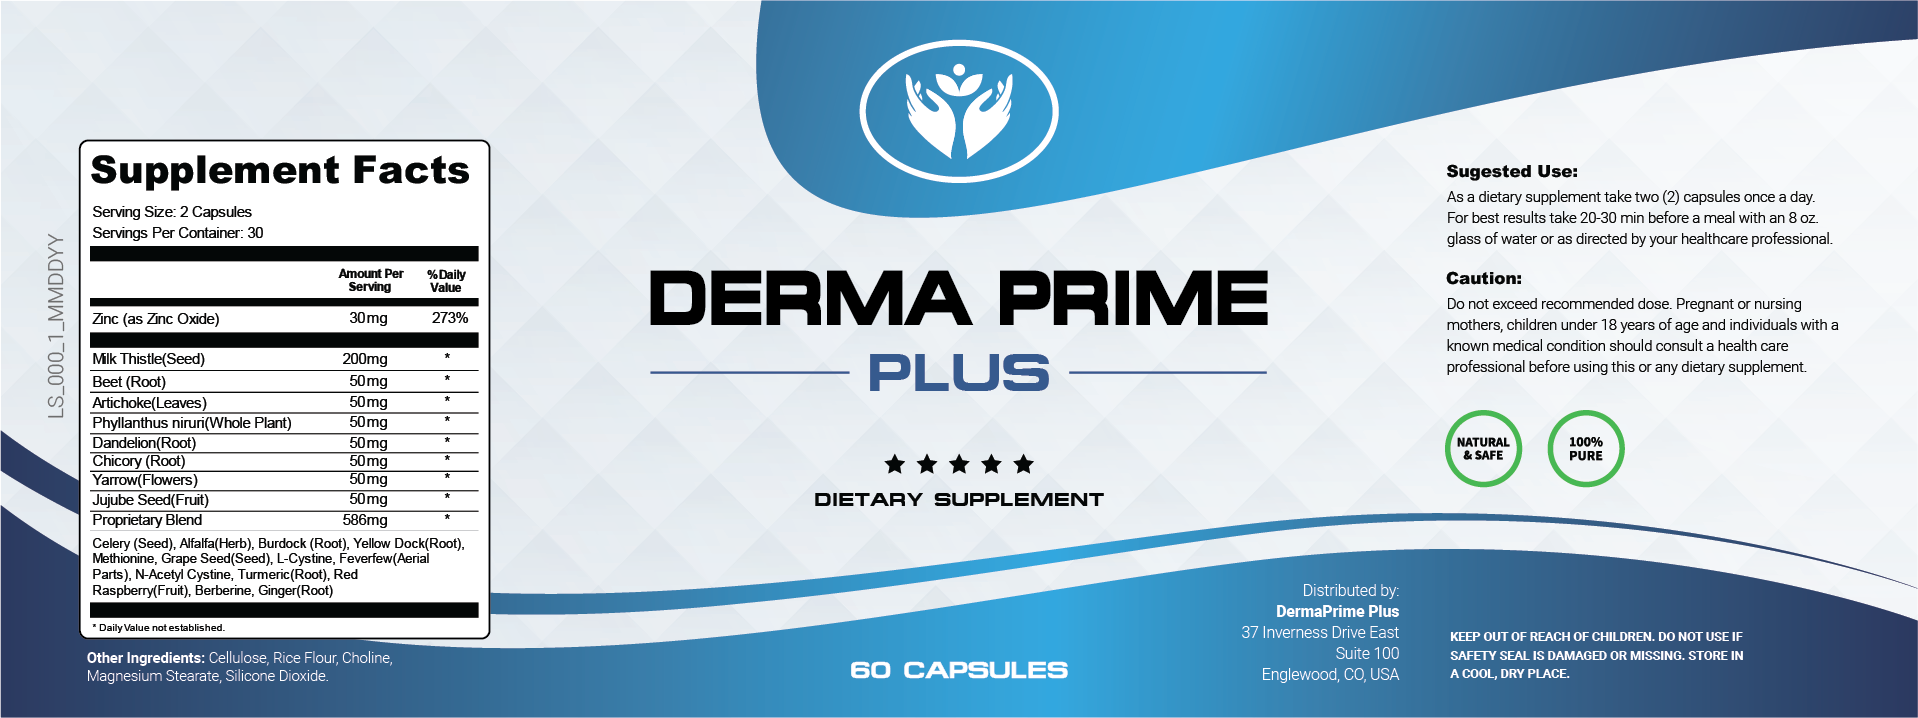 Derma Prime Plus healthy skin supplement Facts